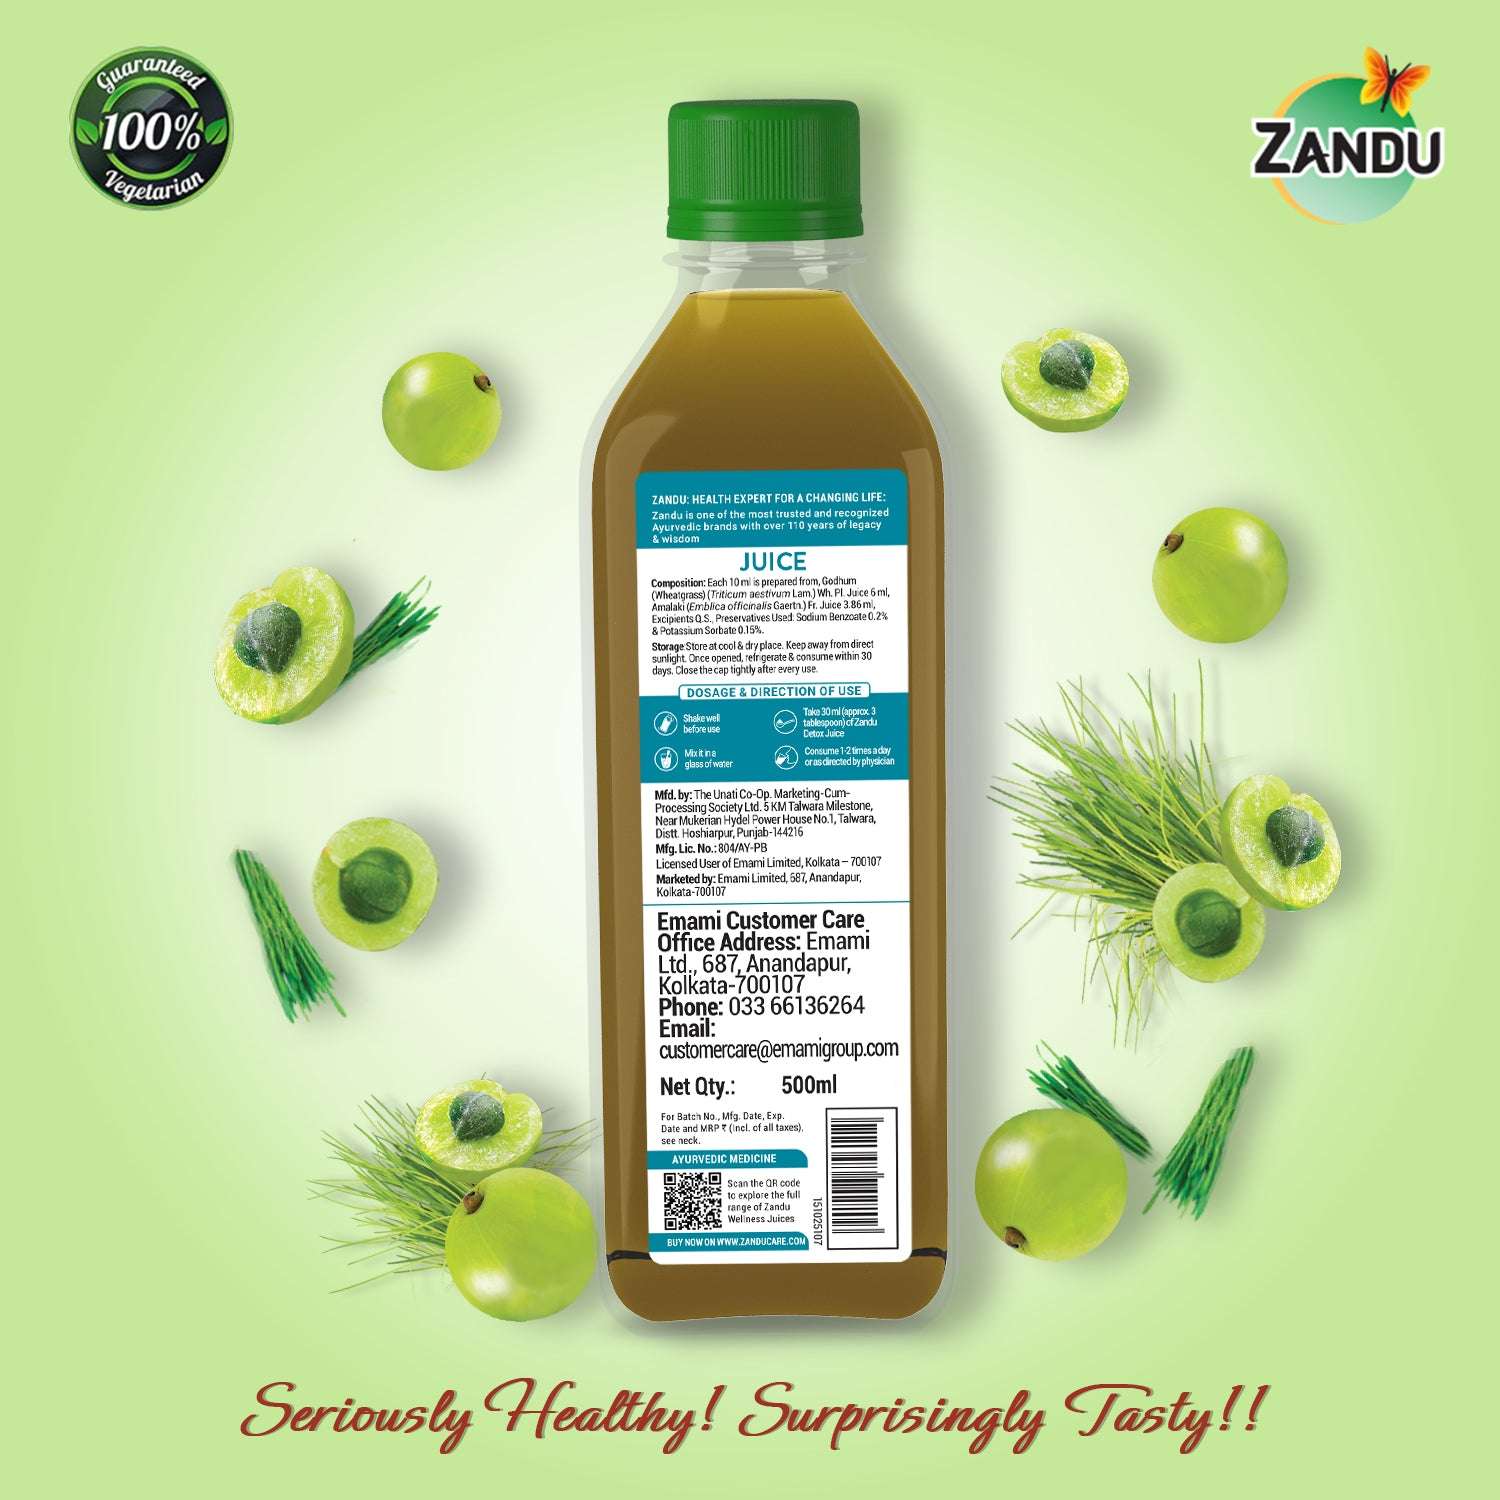 Zandu Detox Juice ingredients